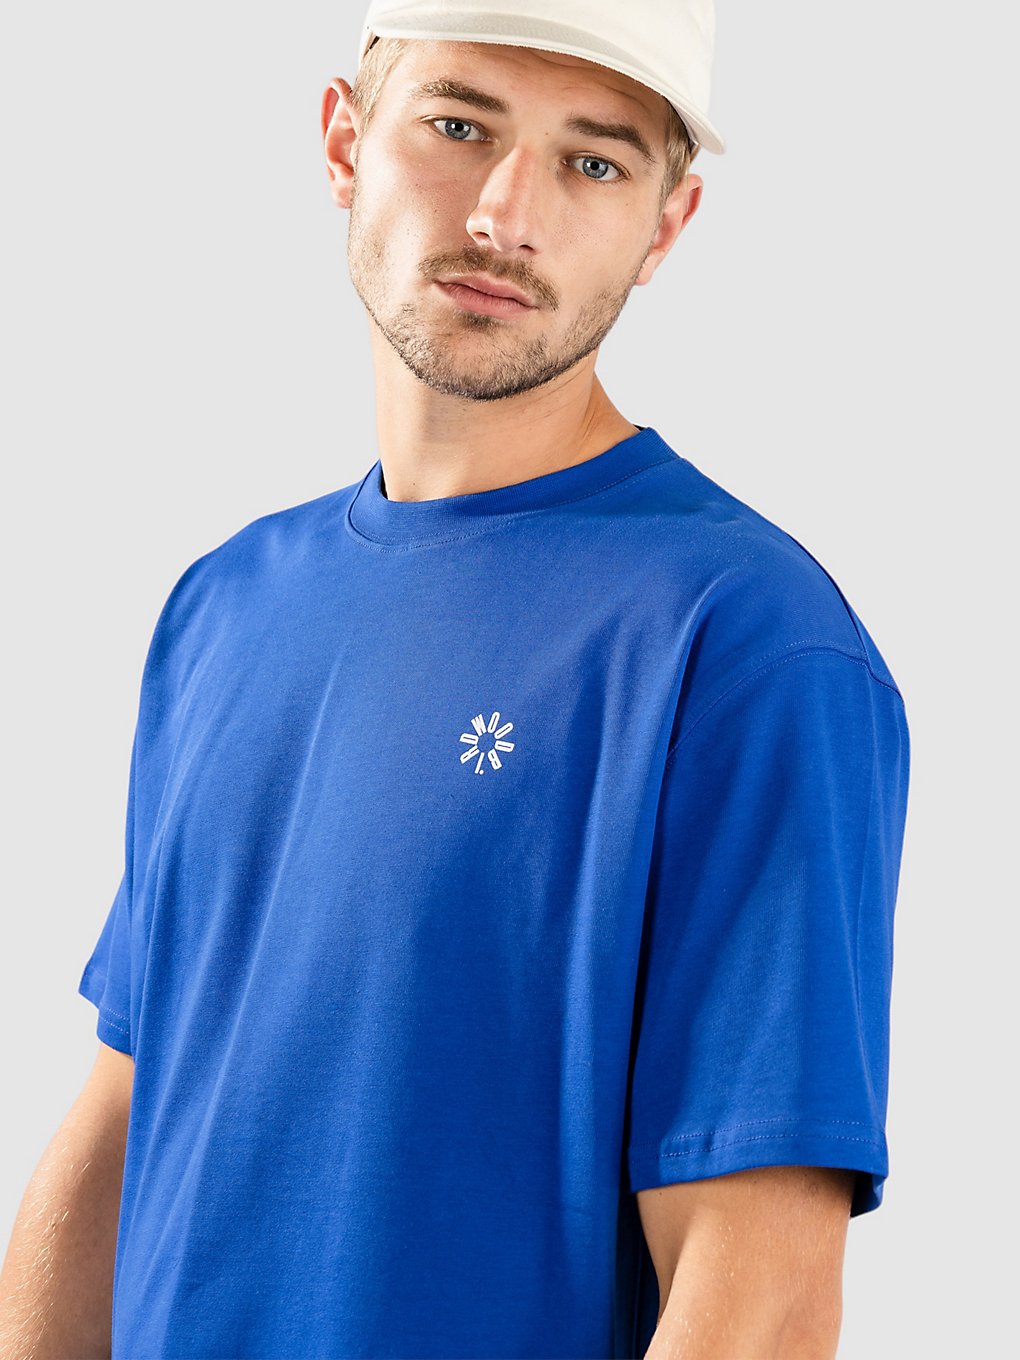 Woodbird Baine Star T-Shirt blauw